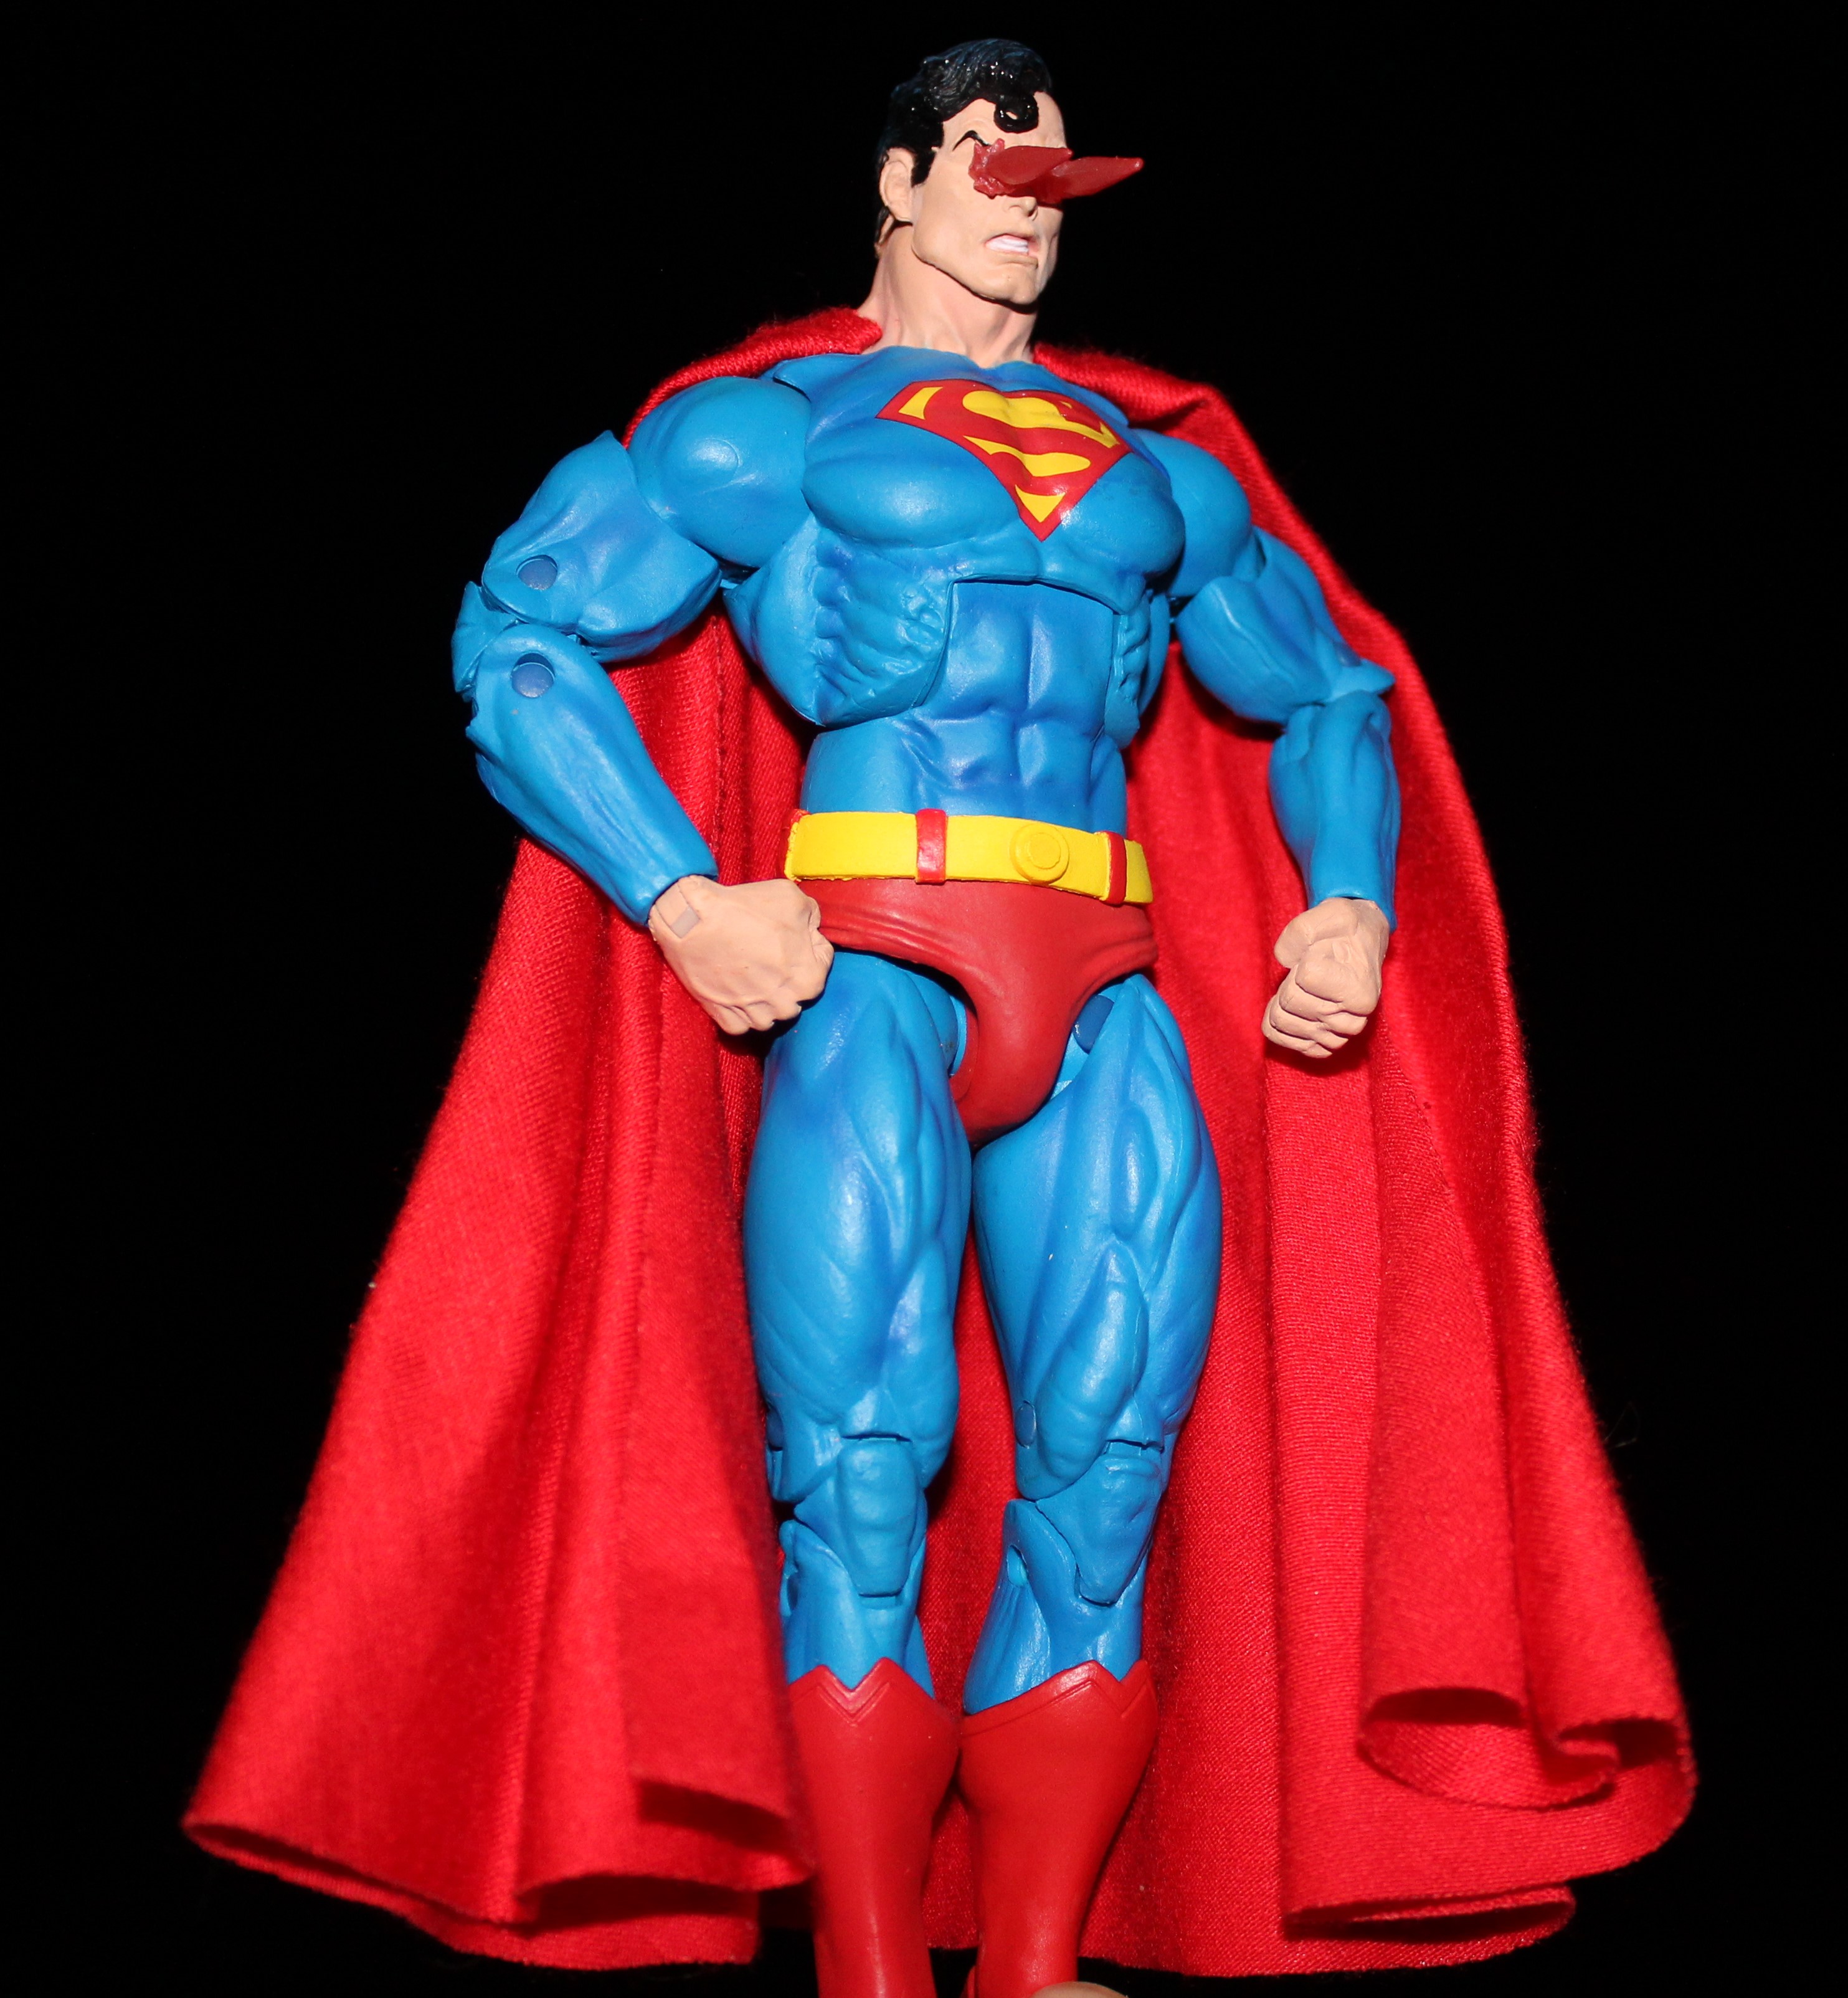 neca superman 7 inch